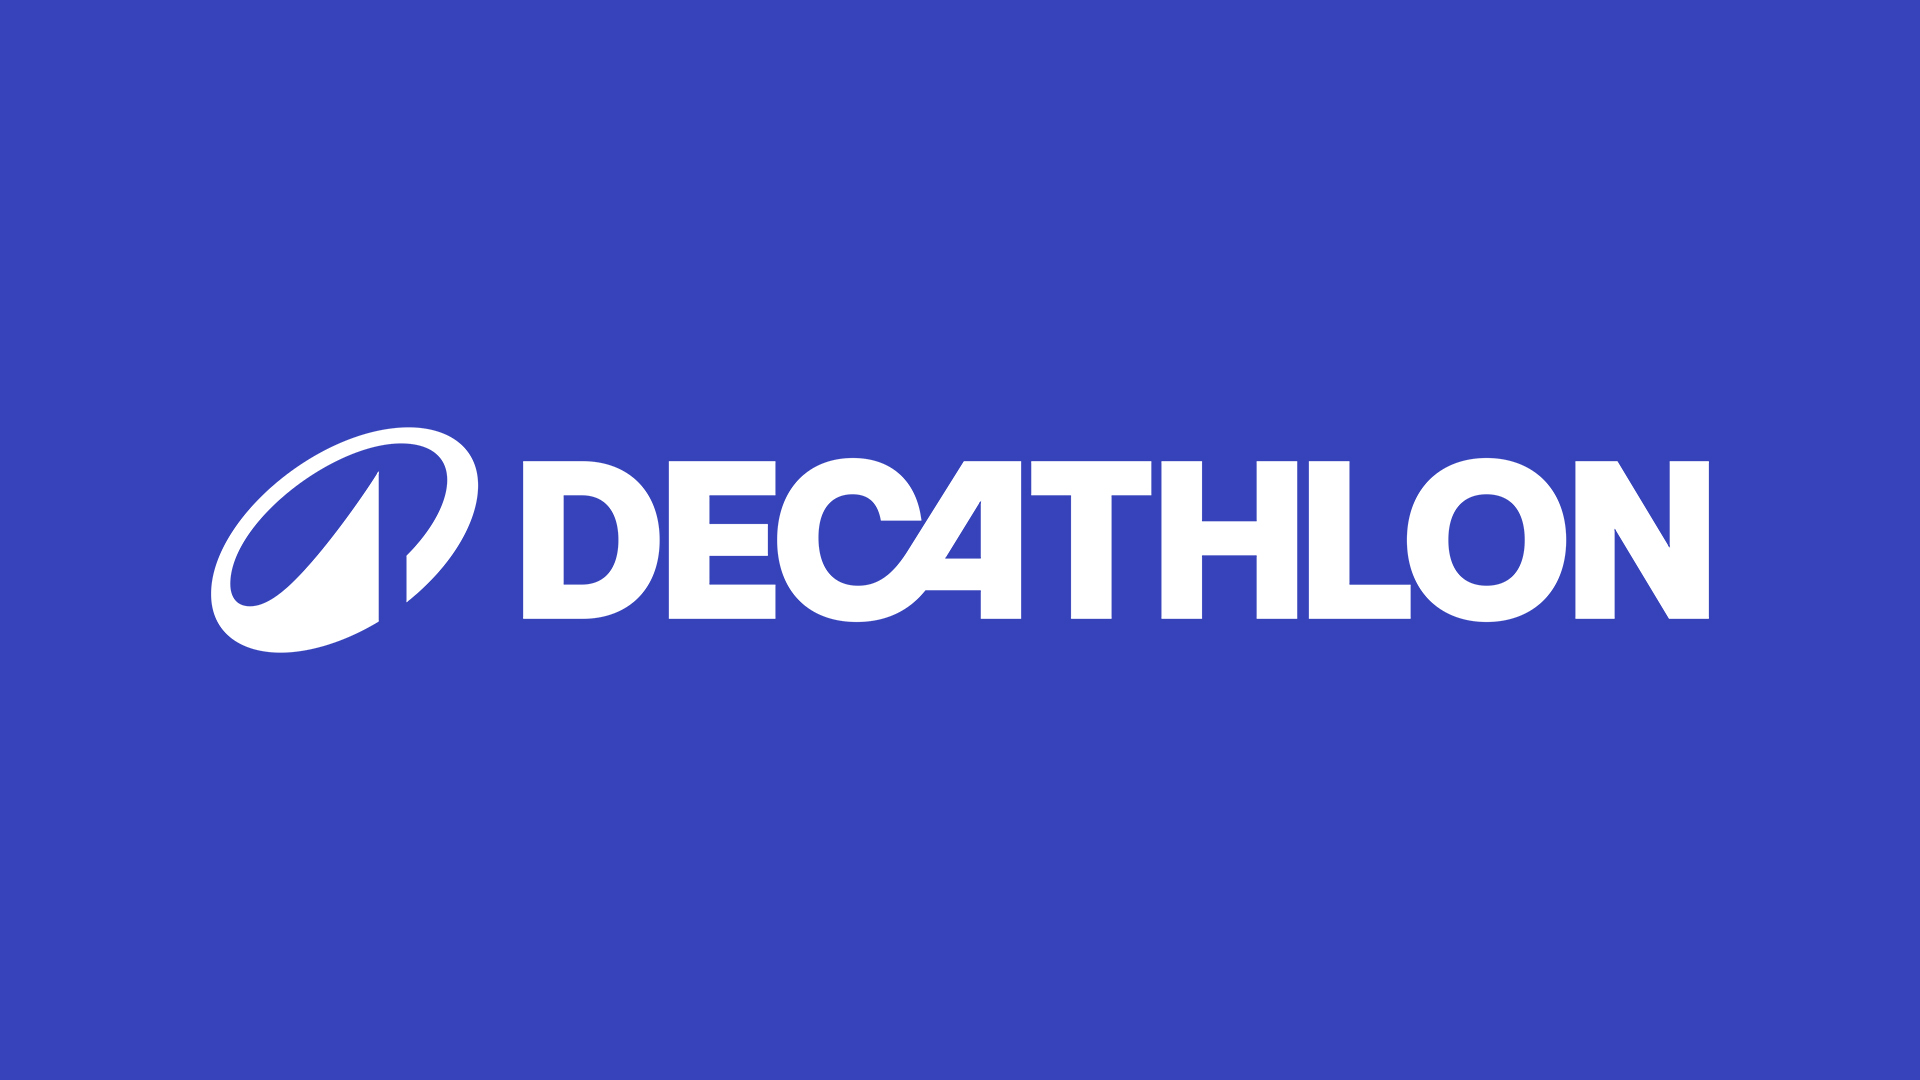 Decathlong new logo